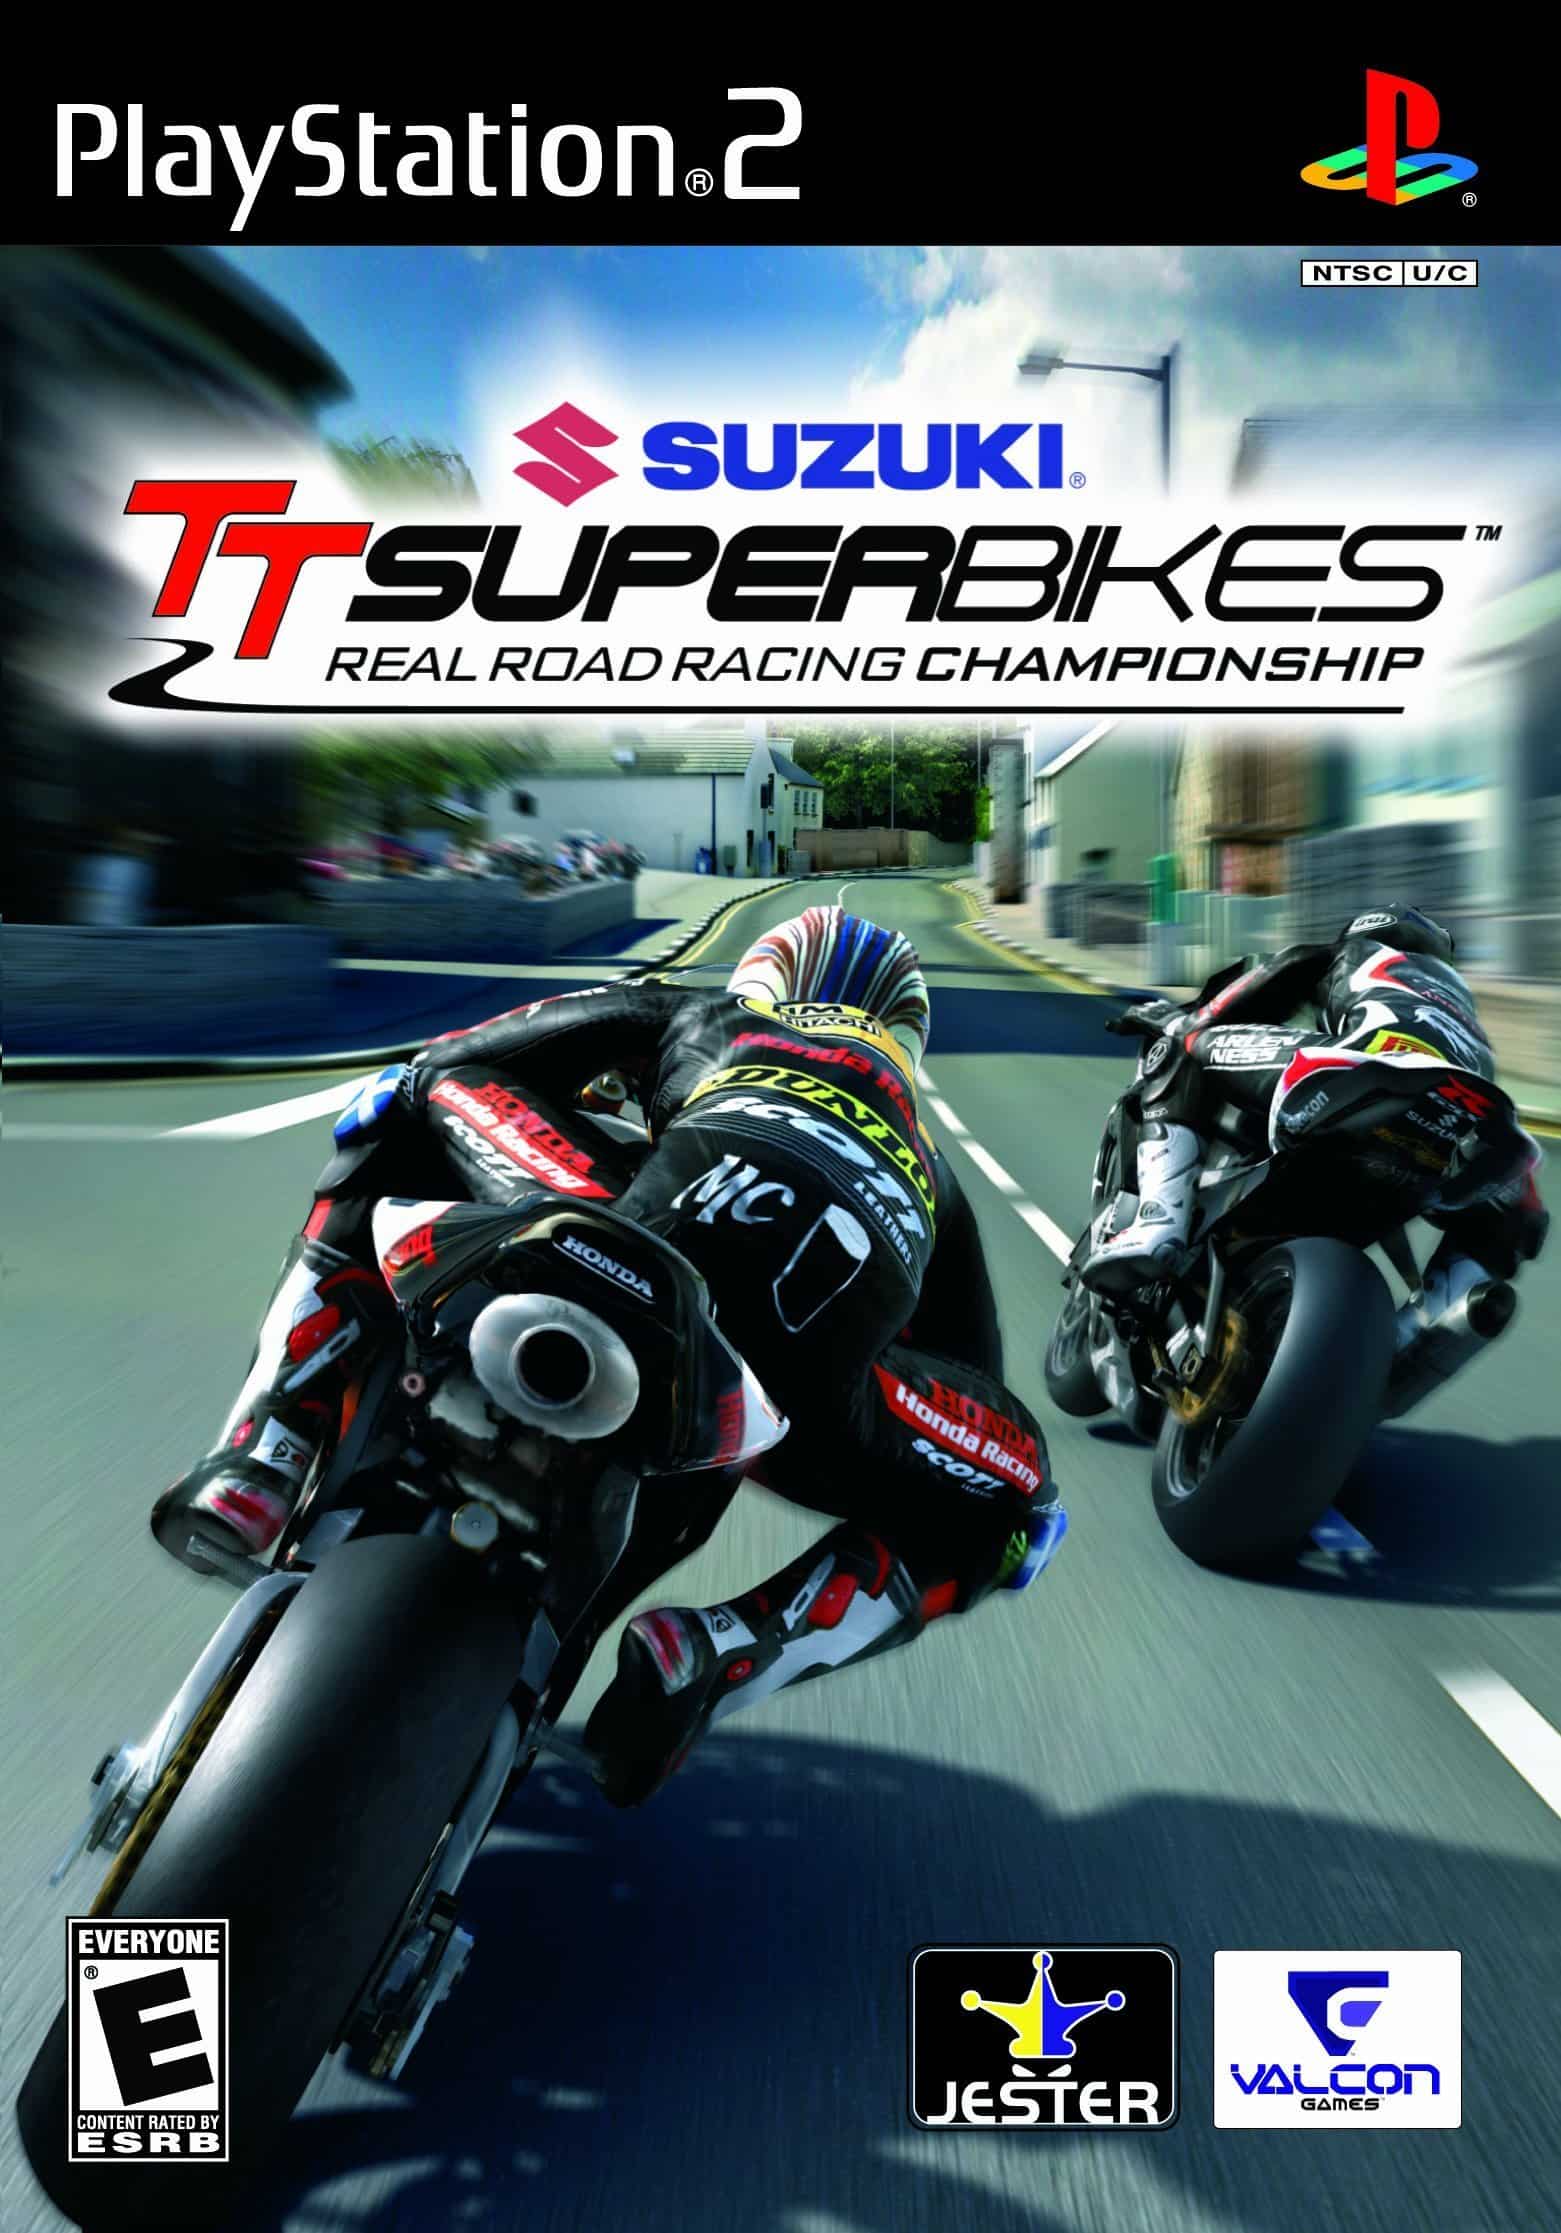 Suzuki TT Superbikes: Real Road Racing Championship player count stats